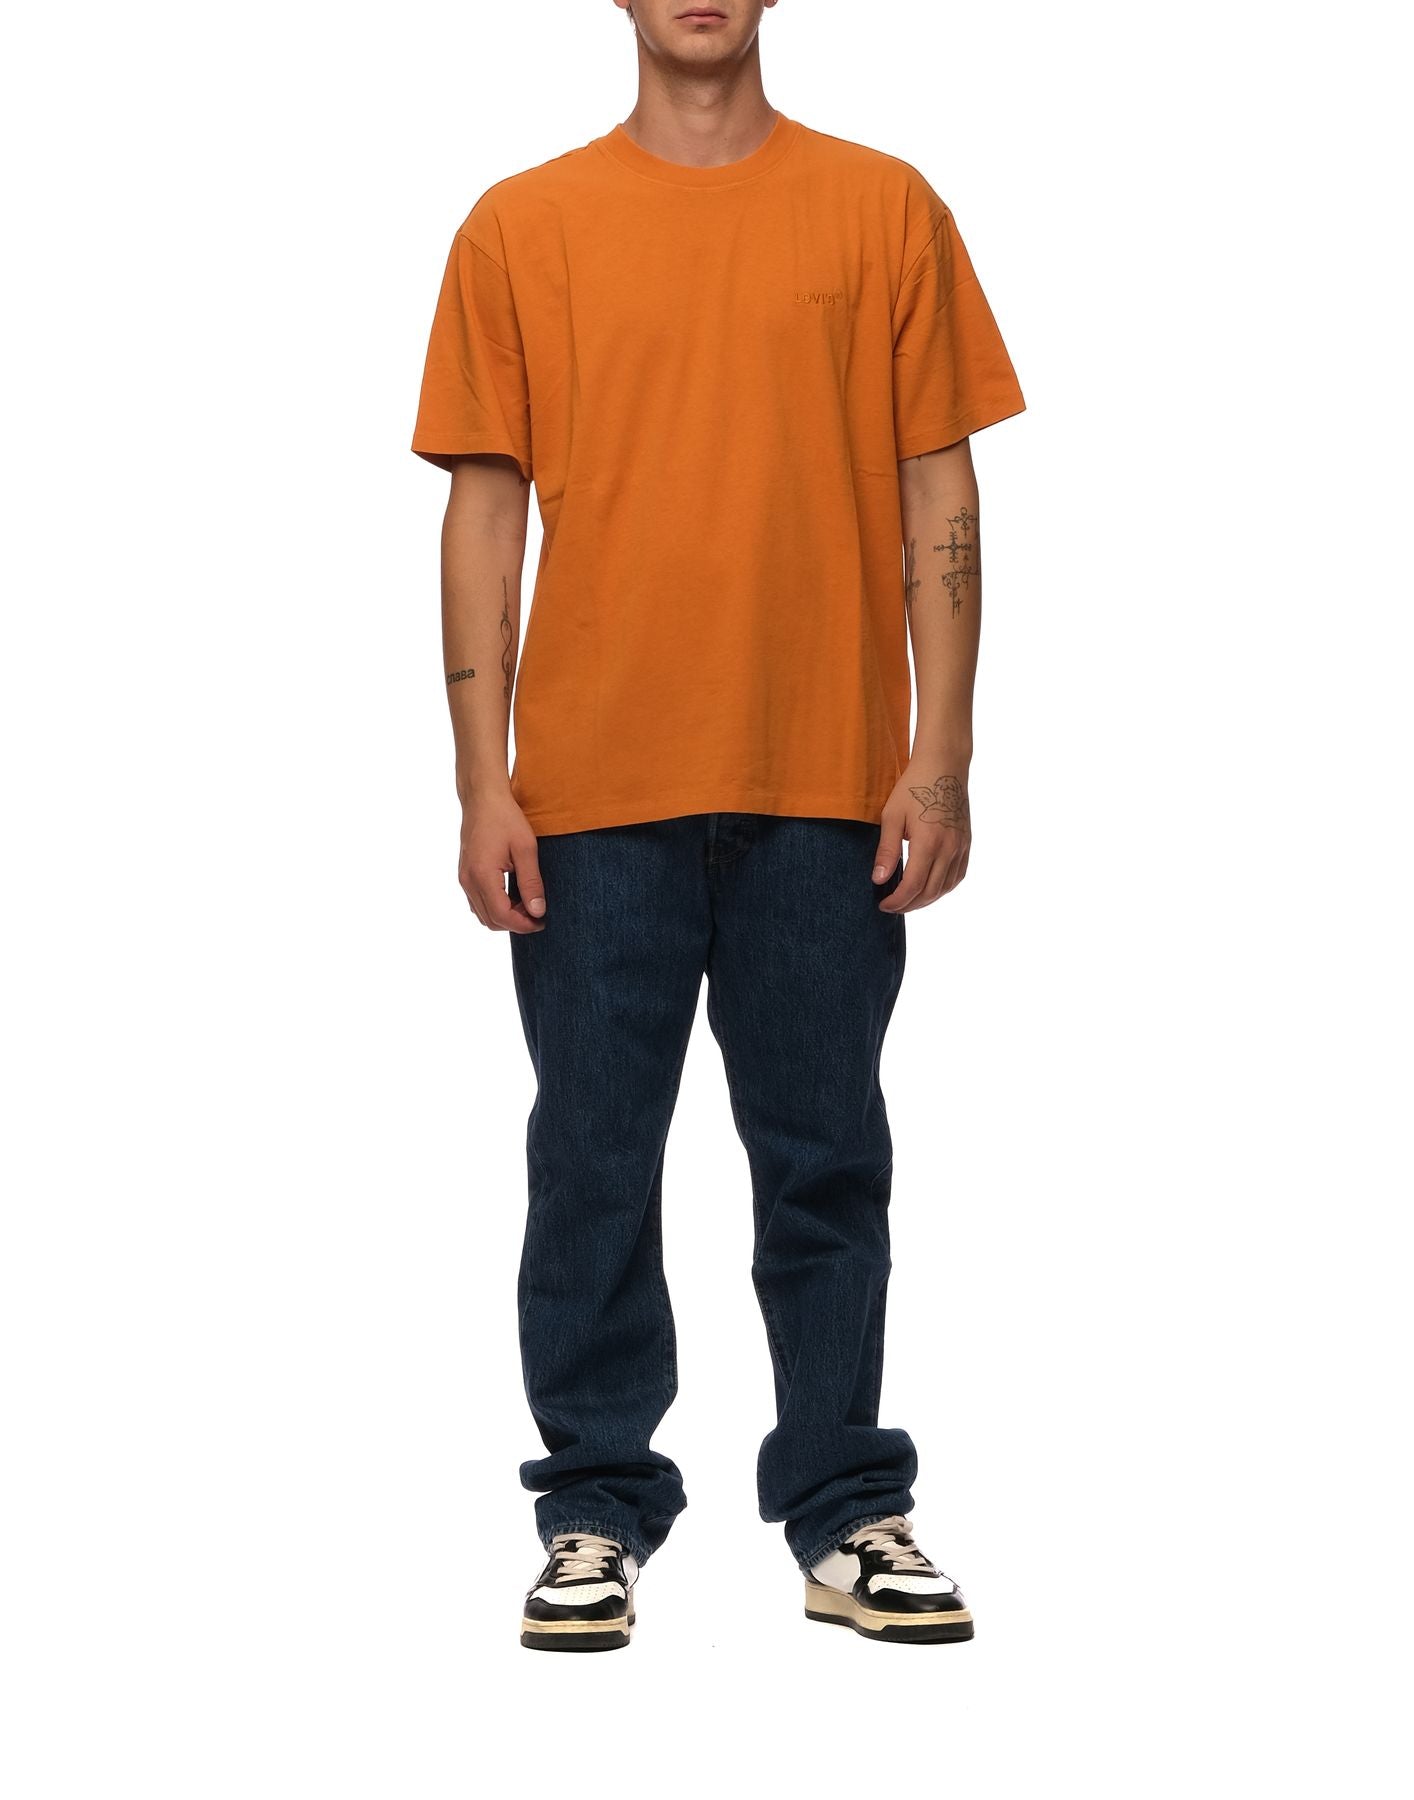 T-shirt uomo A0637 0070 DESERT SUN Levi's